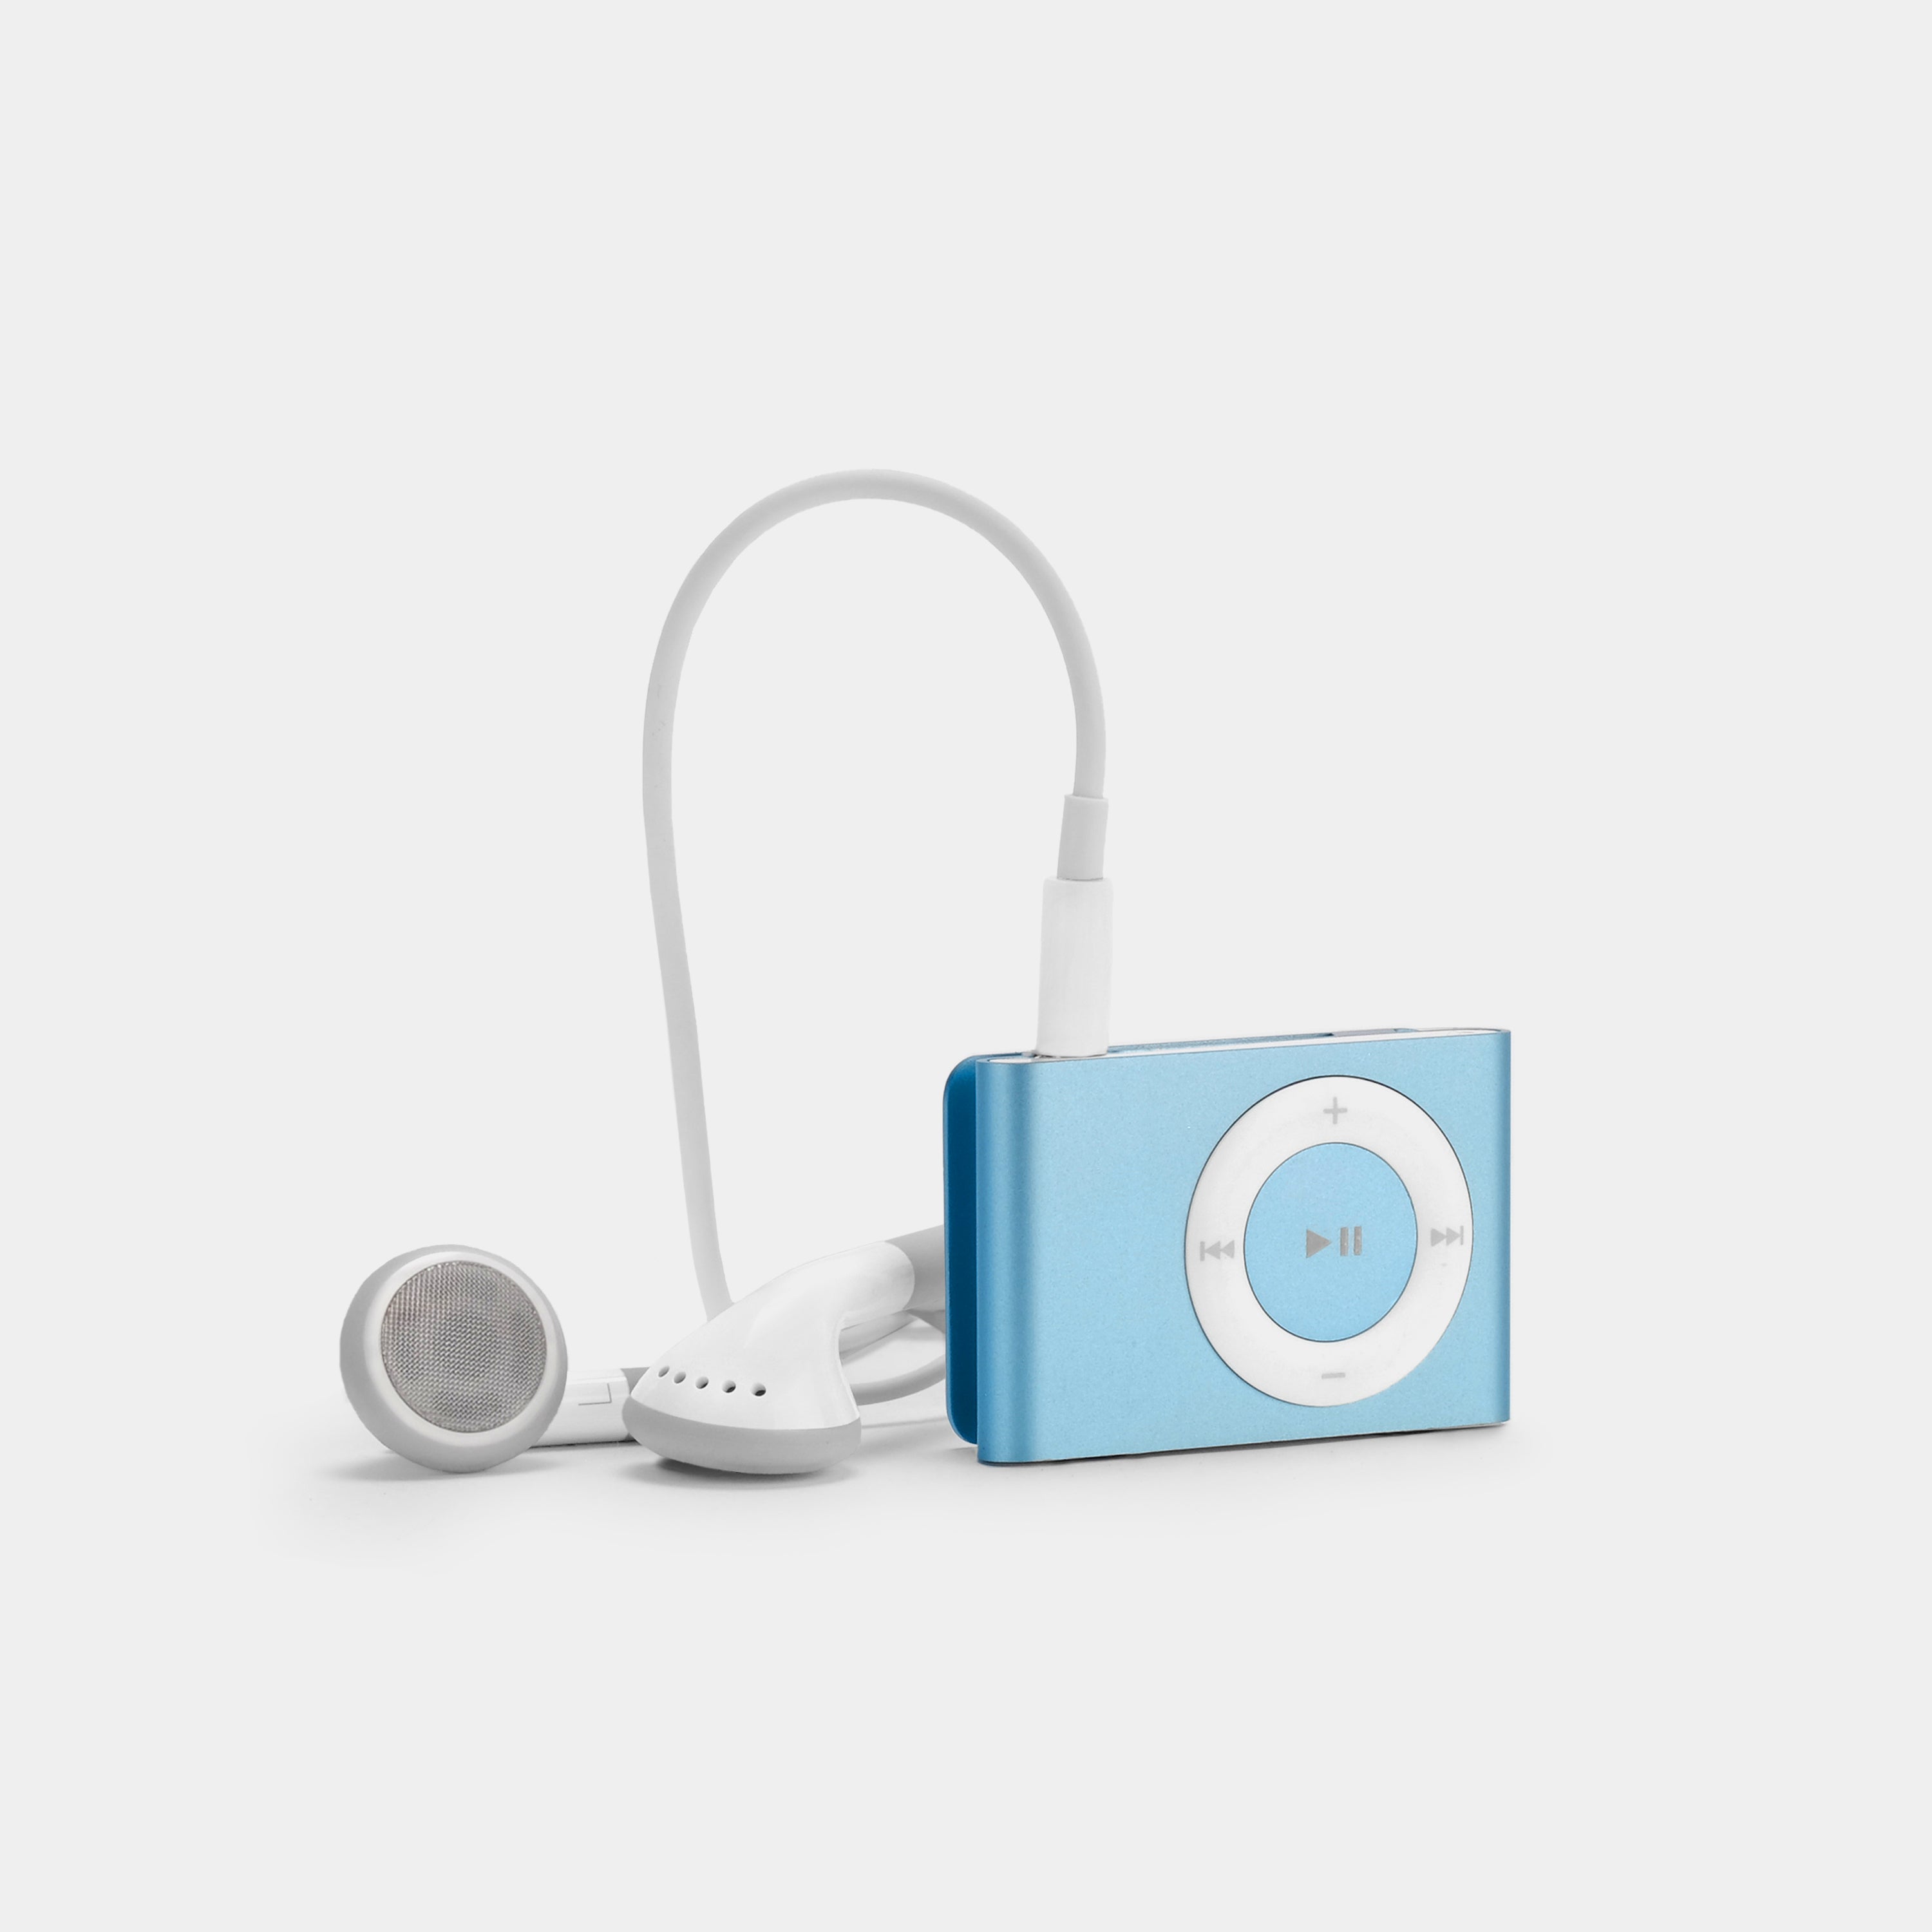 Apple iPod Shuffle (2nd Generation) 1GB MP3 Player